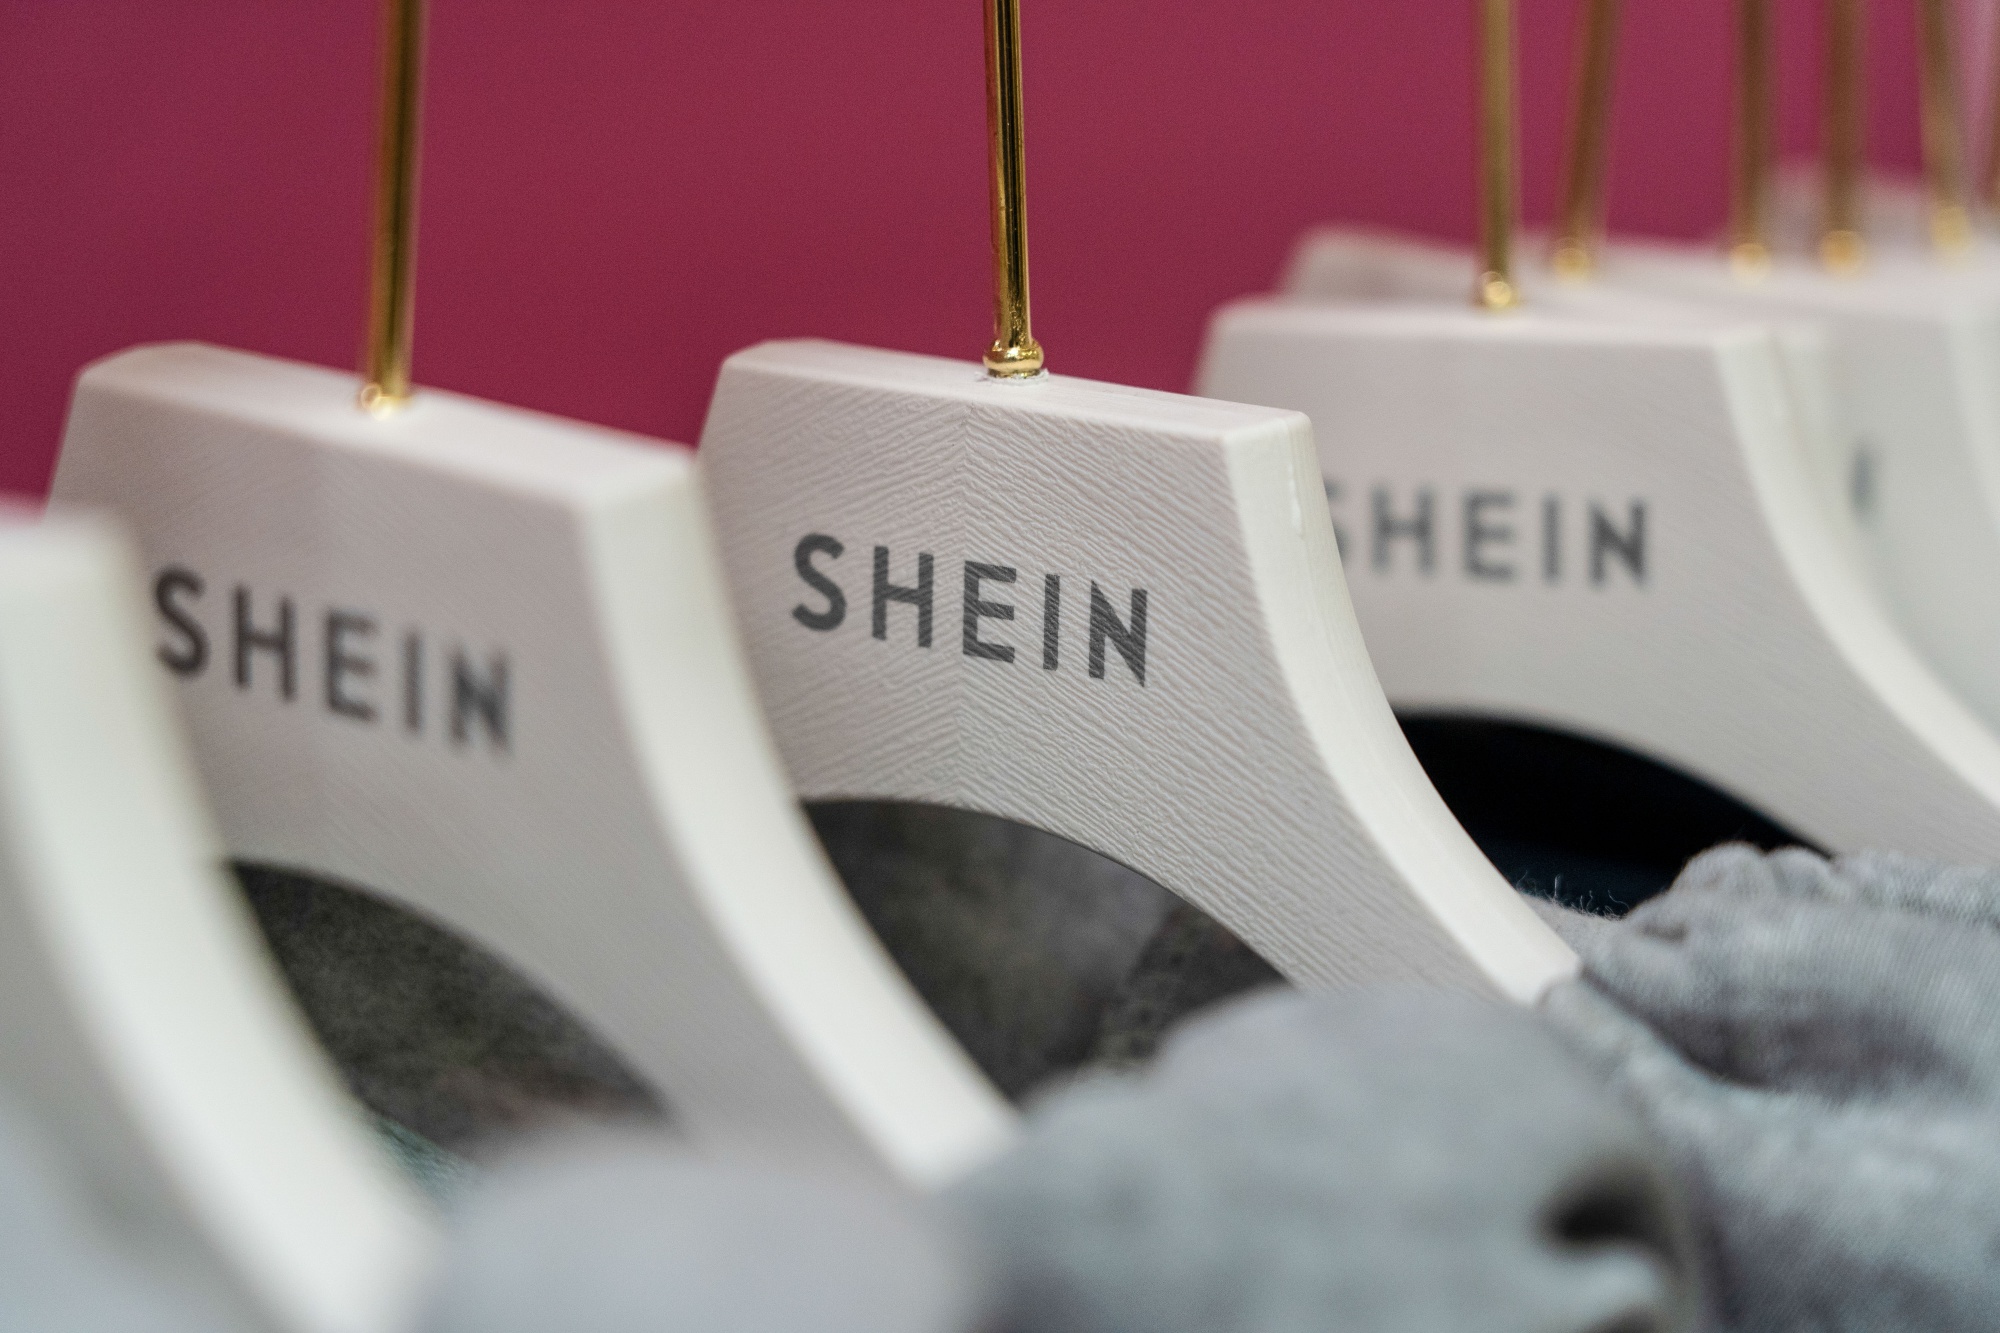 Shein entra com pedido confidencial de IPO nos EUA - Bloomberg